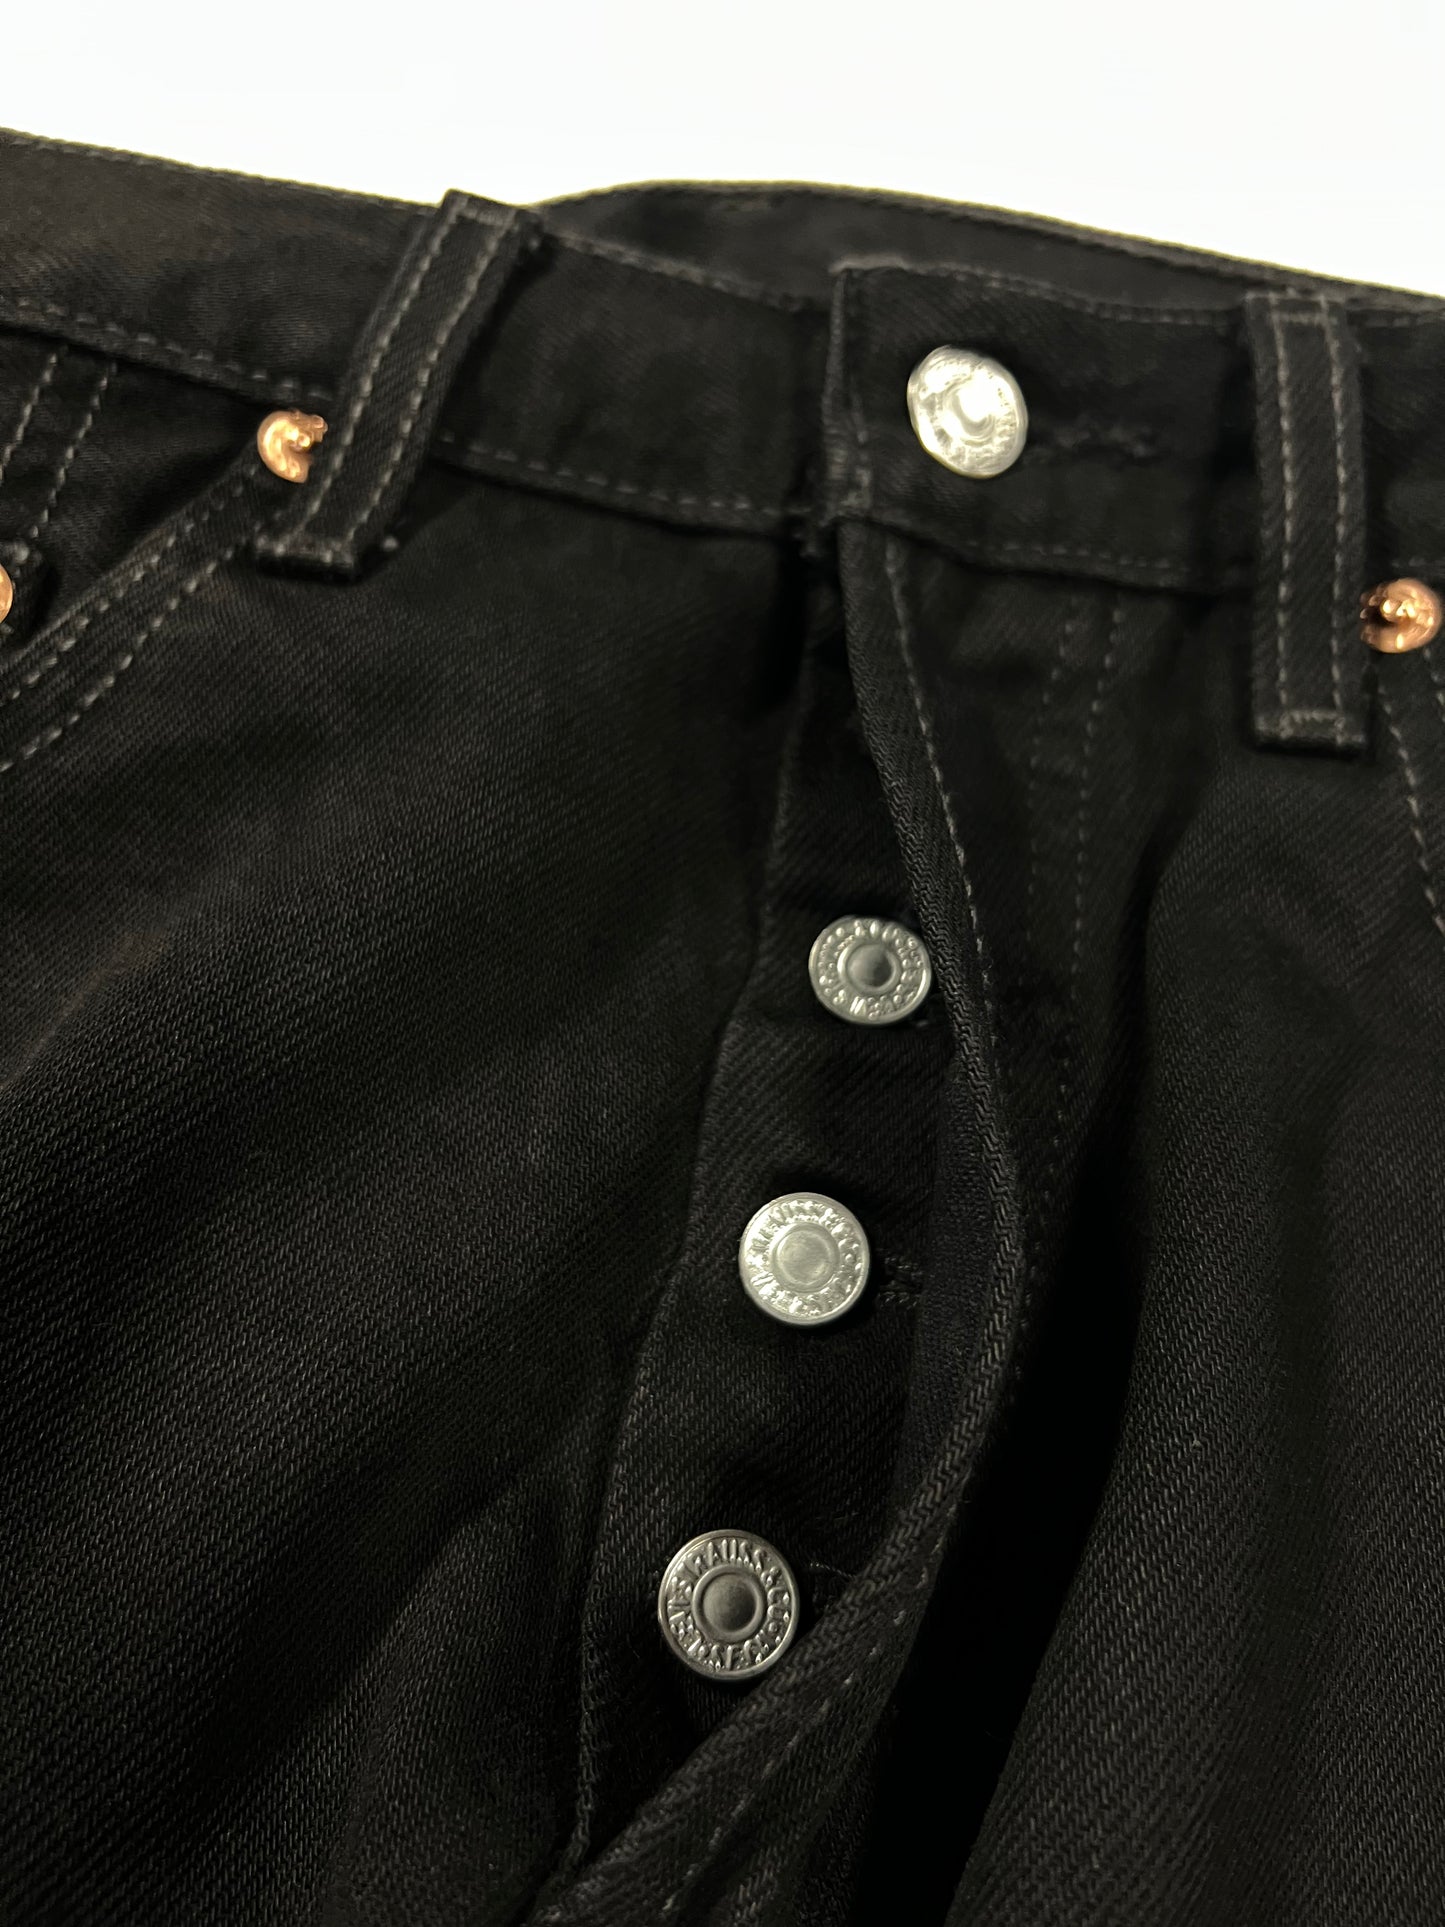 LEVI’s Black 501's 32x34 Preshrunk Denim Jeans